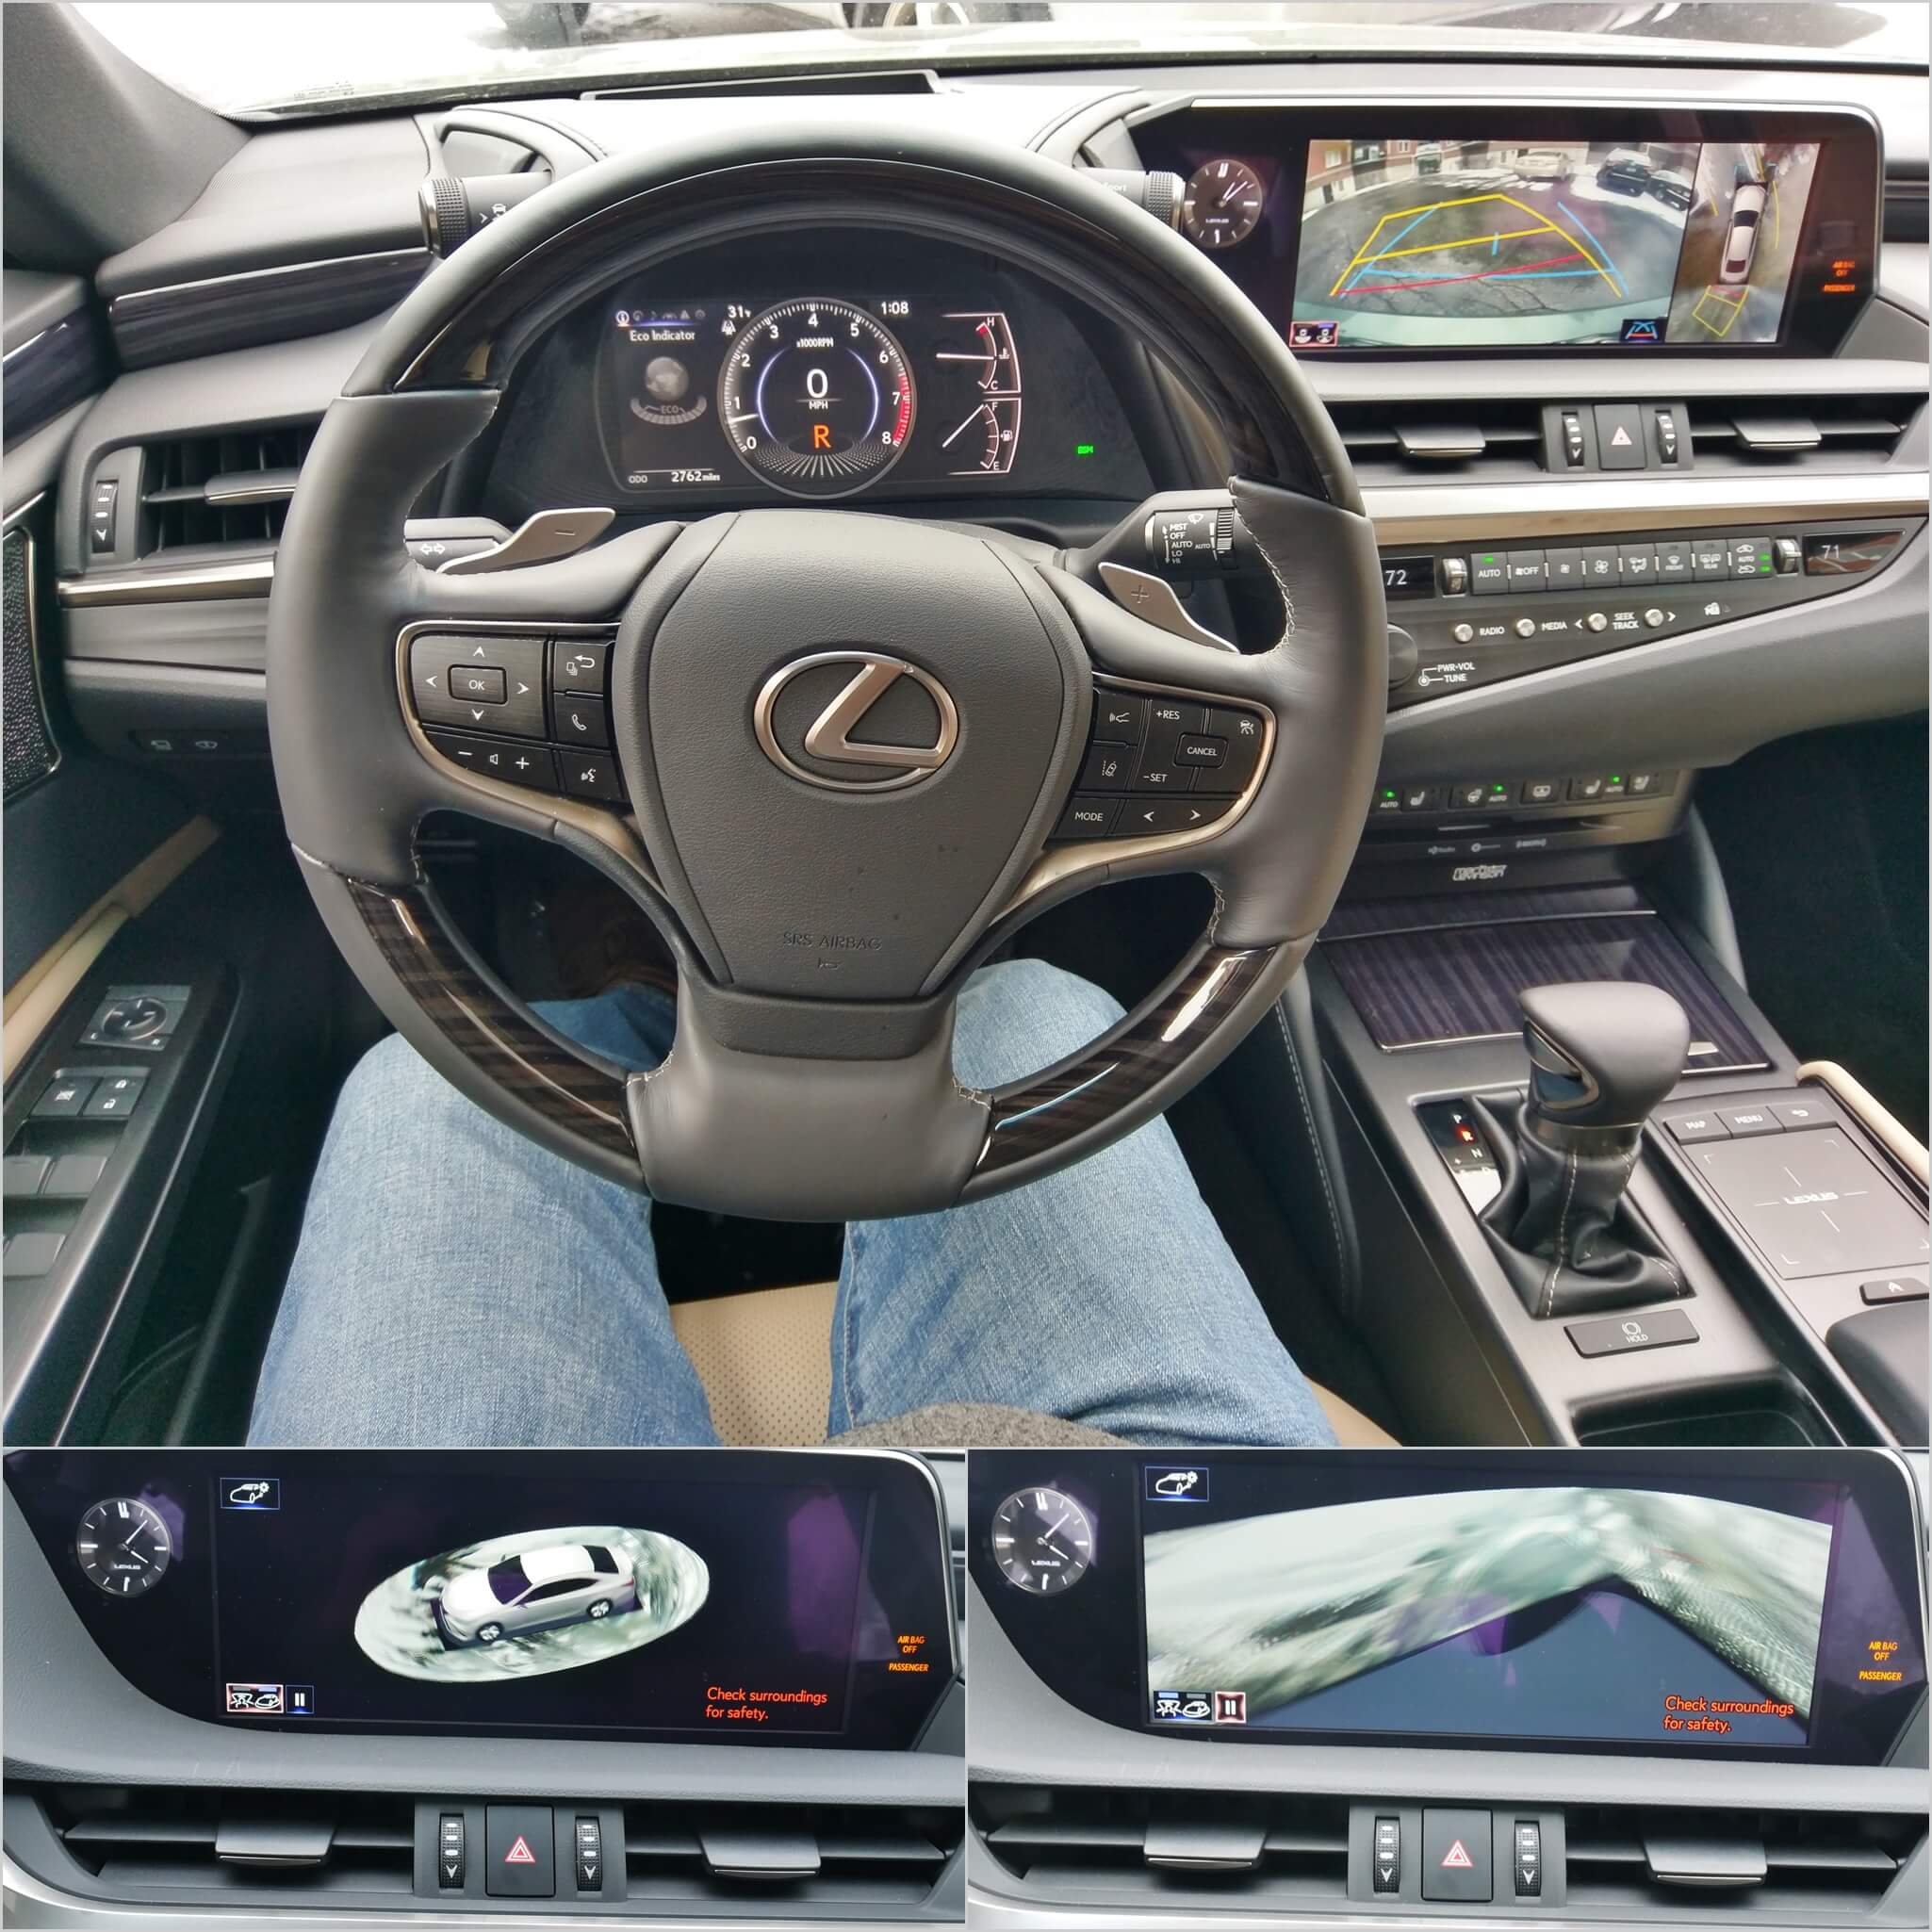 2019 Lexus ES 350: audible sonar park alert; available Surround Camera, forward, rear cross traffic minder, Perimeter park, departure scan